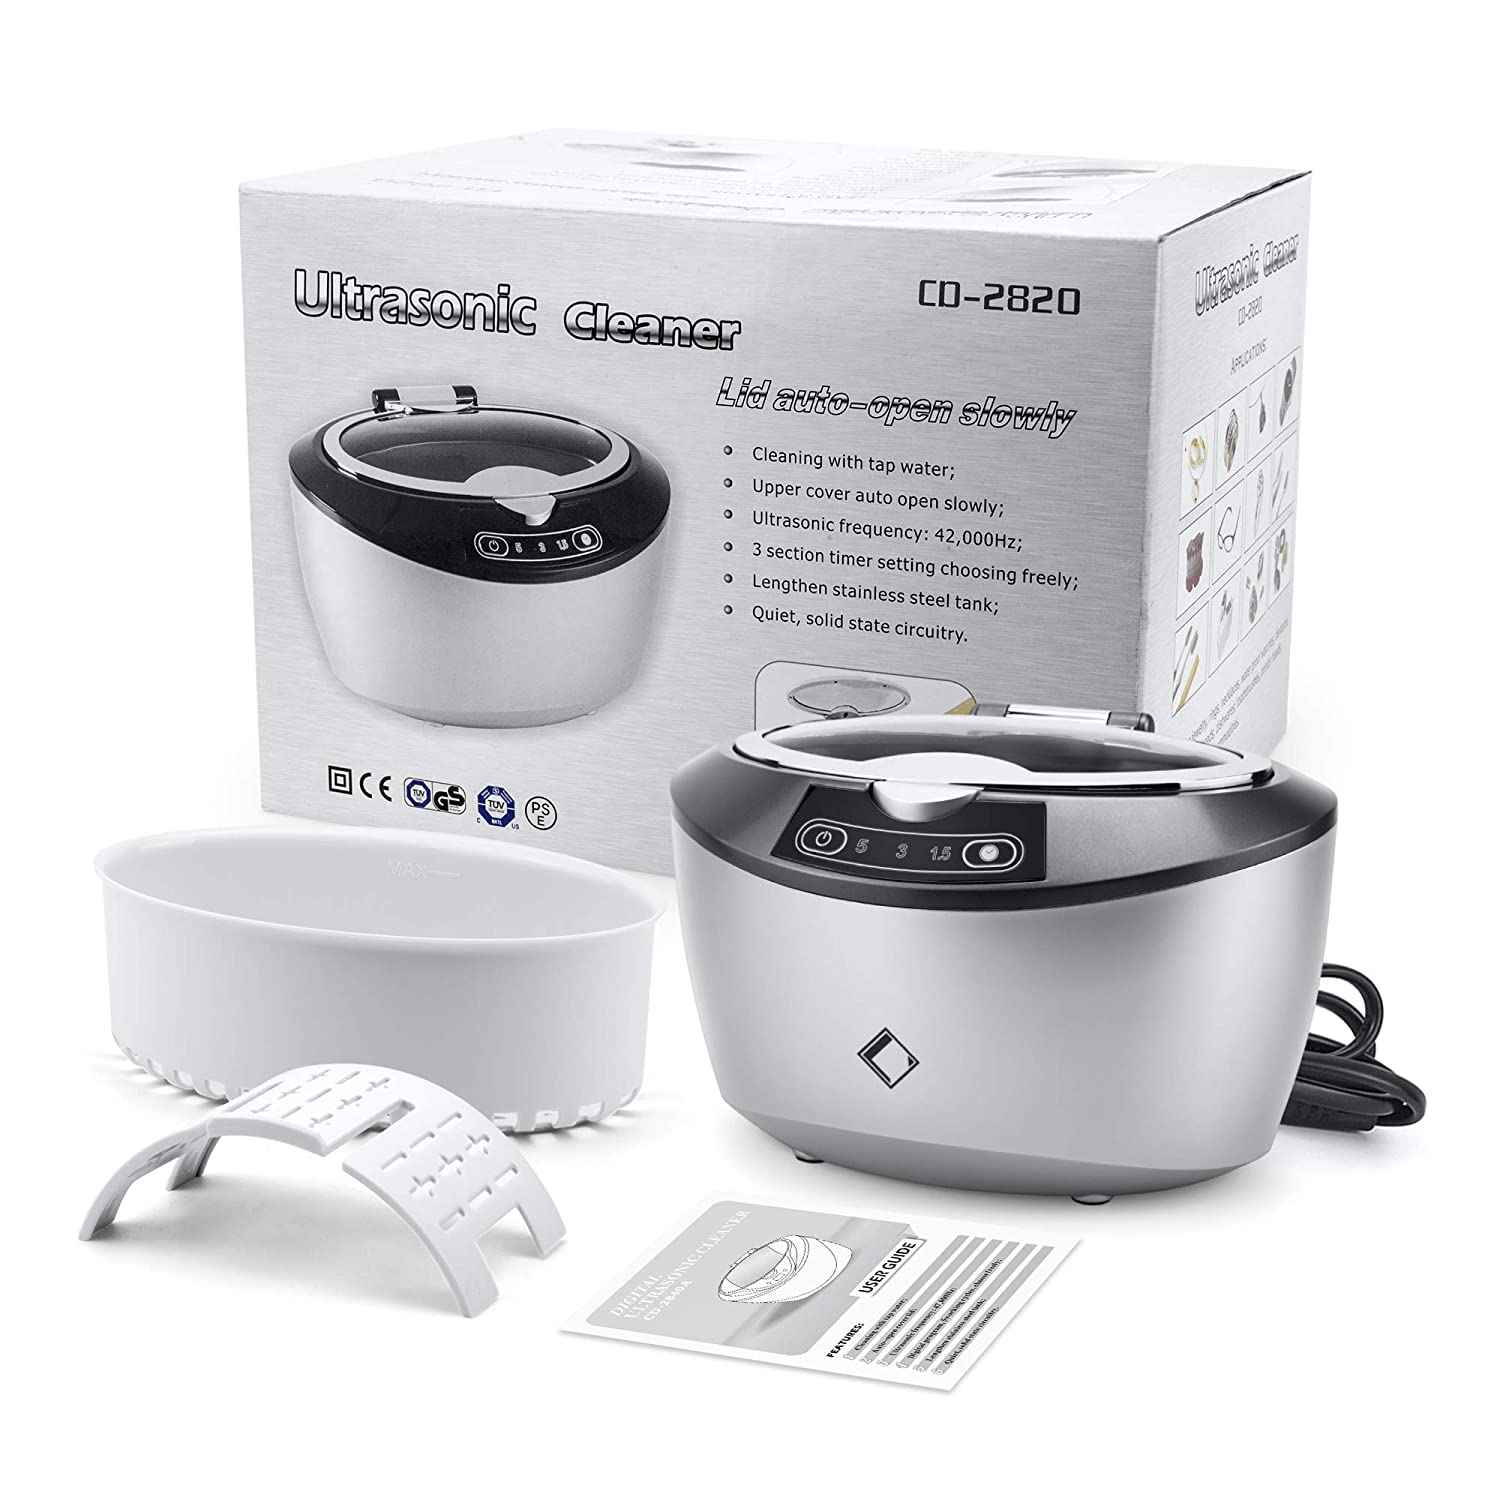 LifeBasis CD-2820 Digital Ultrasonic Cleaner